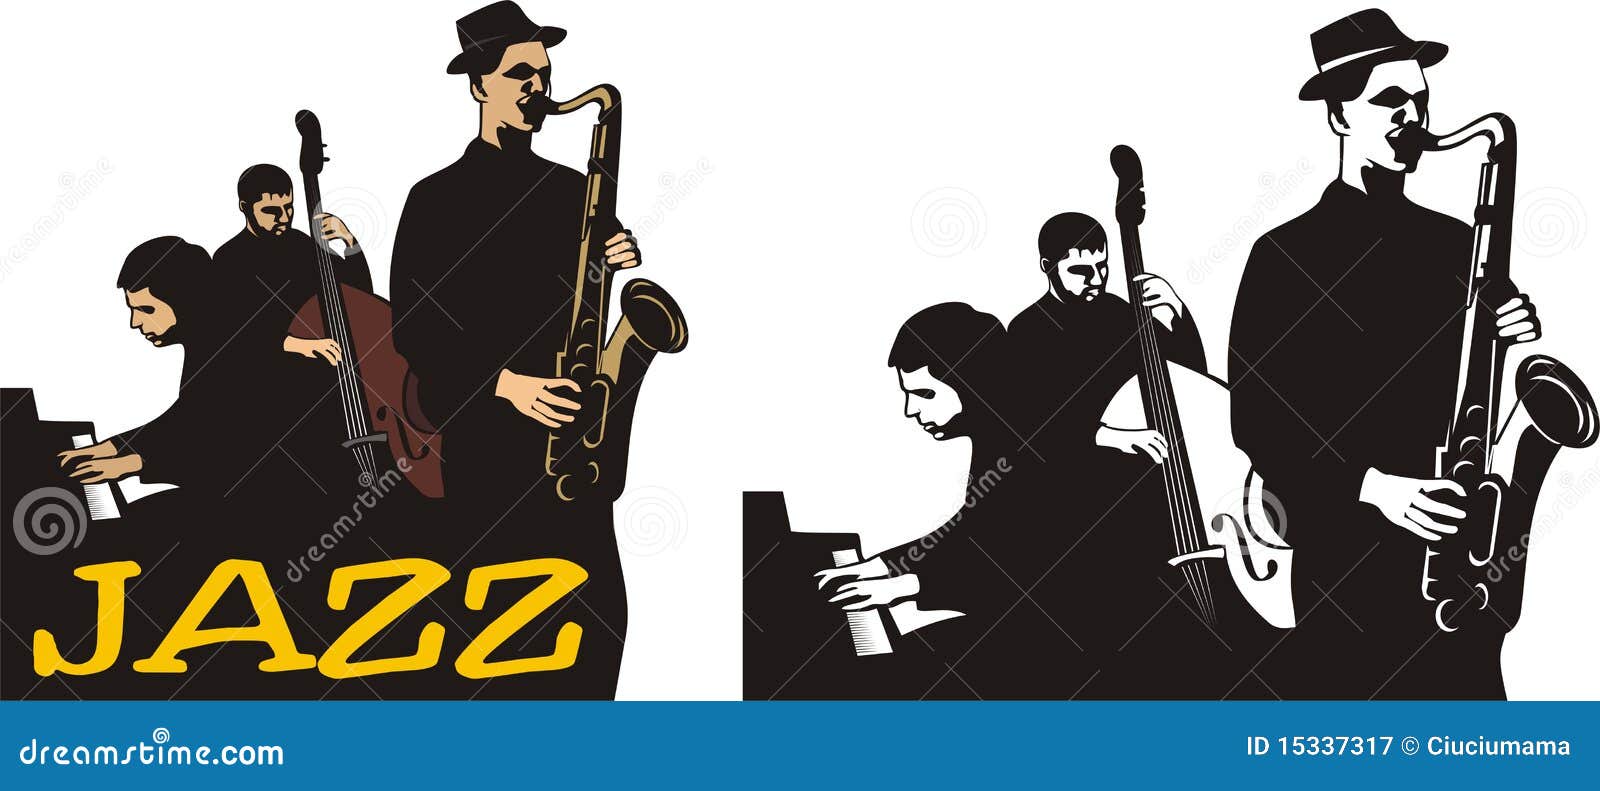 clip art jazz music player - photo #36